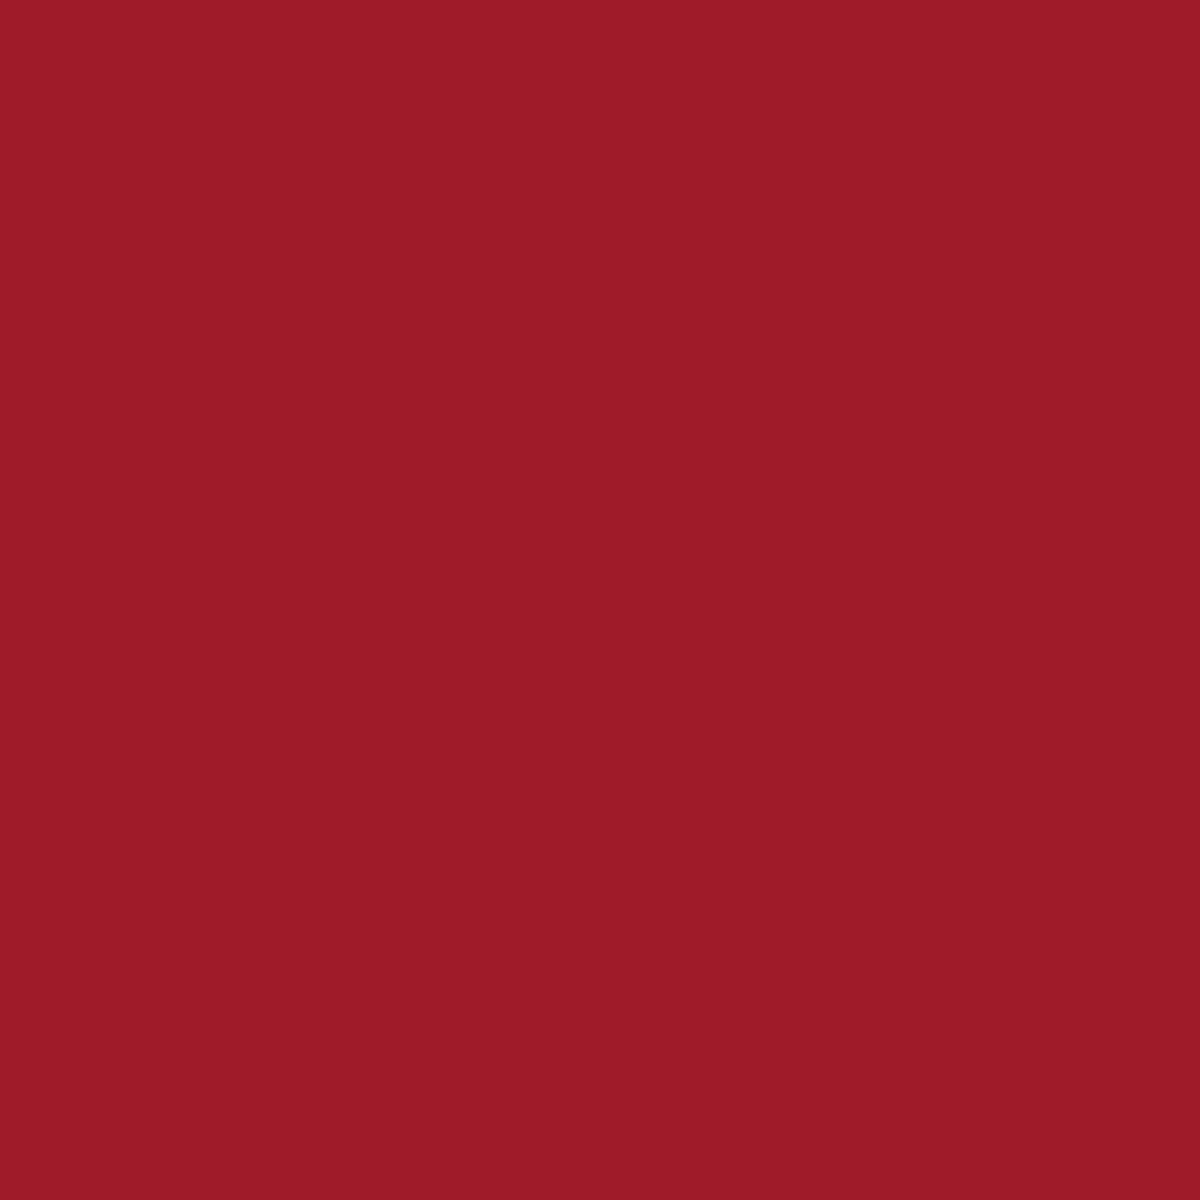 3M Film couleur translucide 3630-83 rouge framboise 1,22m x 45,7m